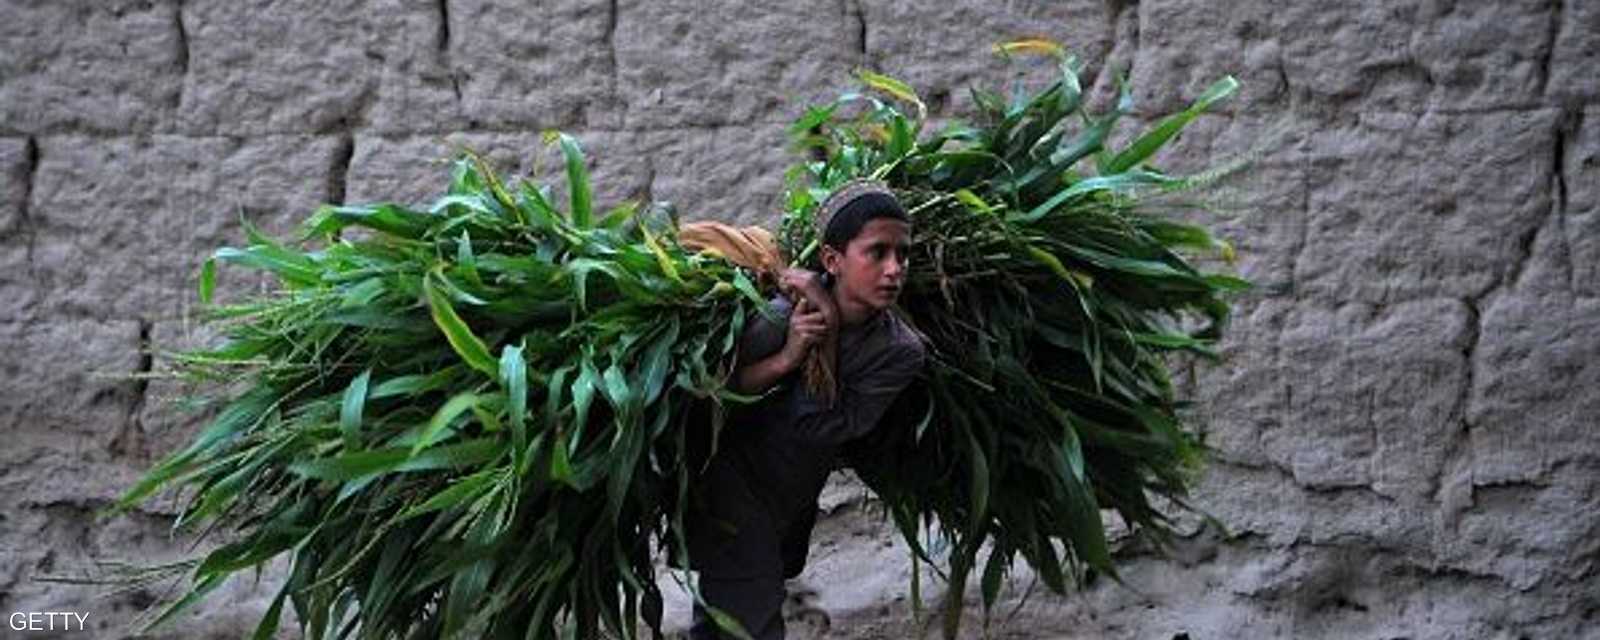 طفل أفغاني يعمل حمالا